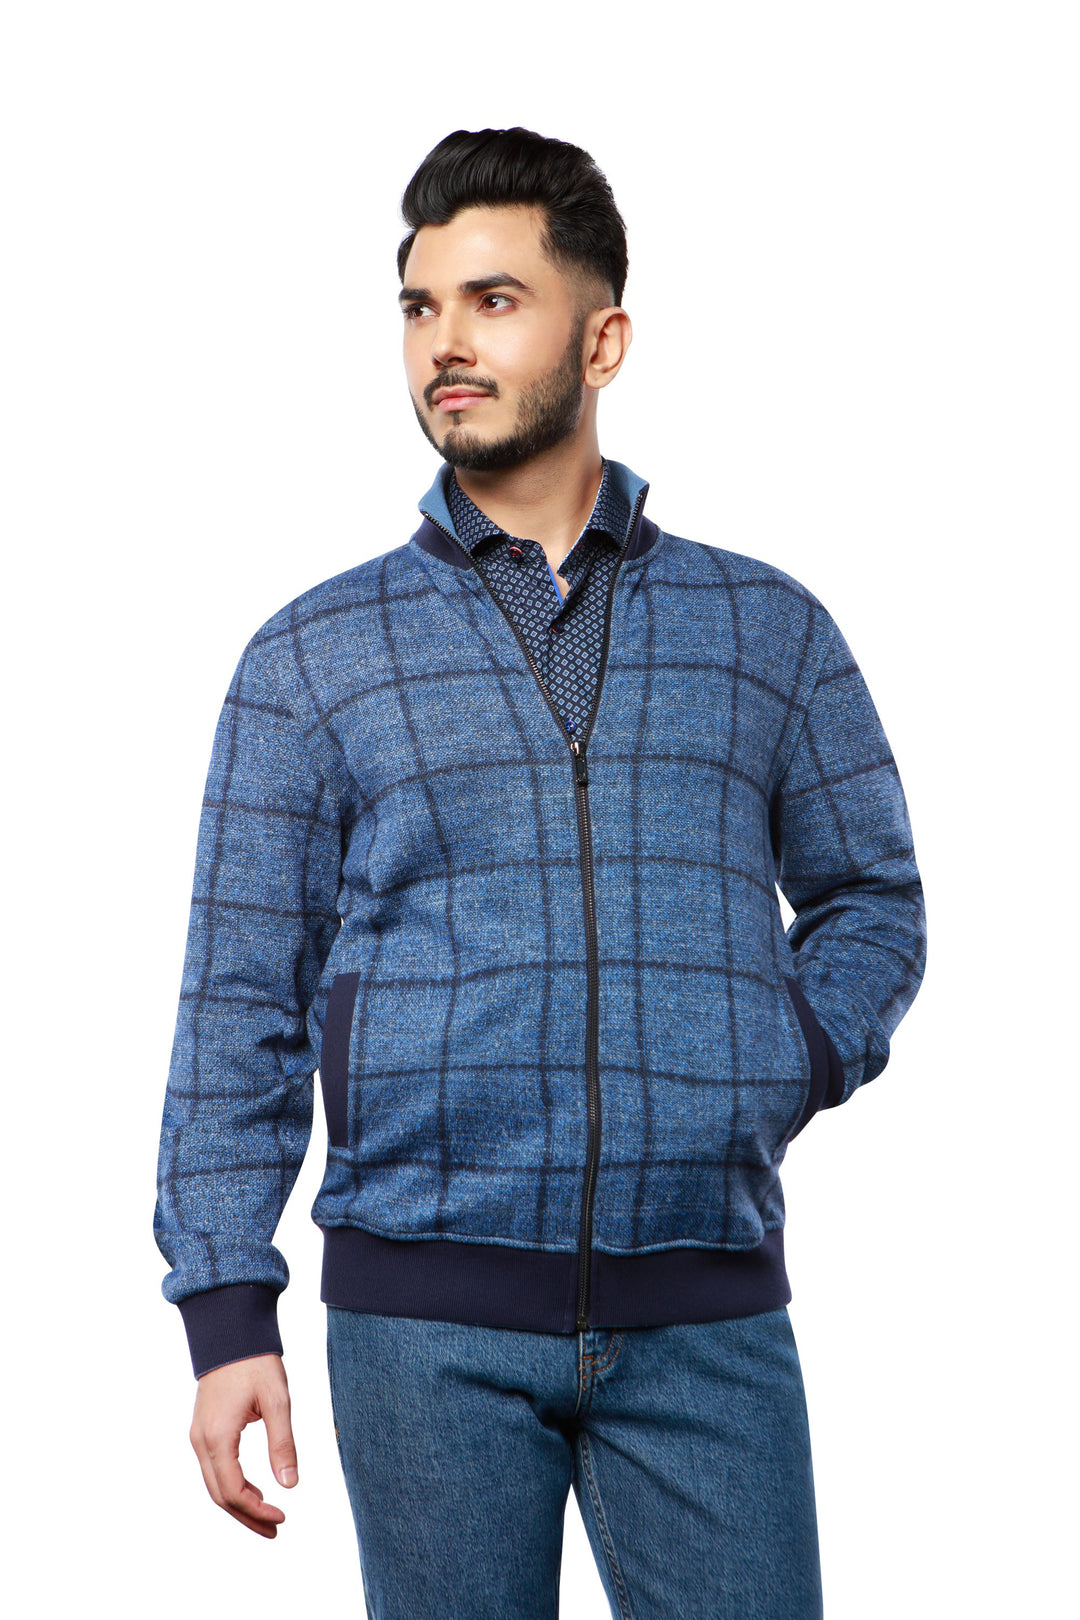 Cardiff Blue Full Zip Sweater - 7 Downie St.®